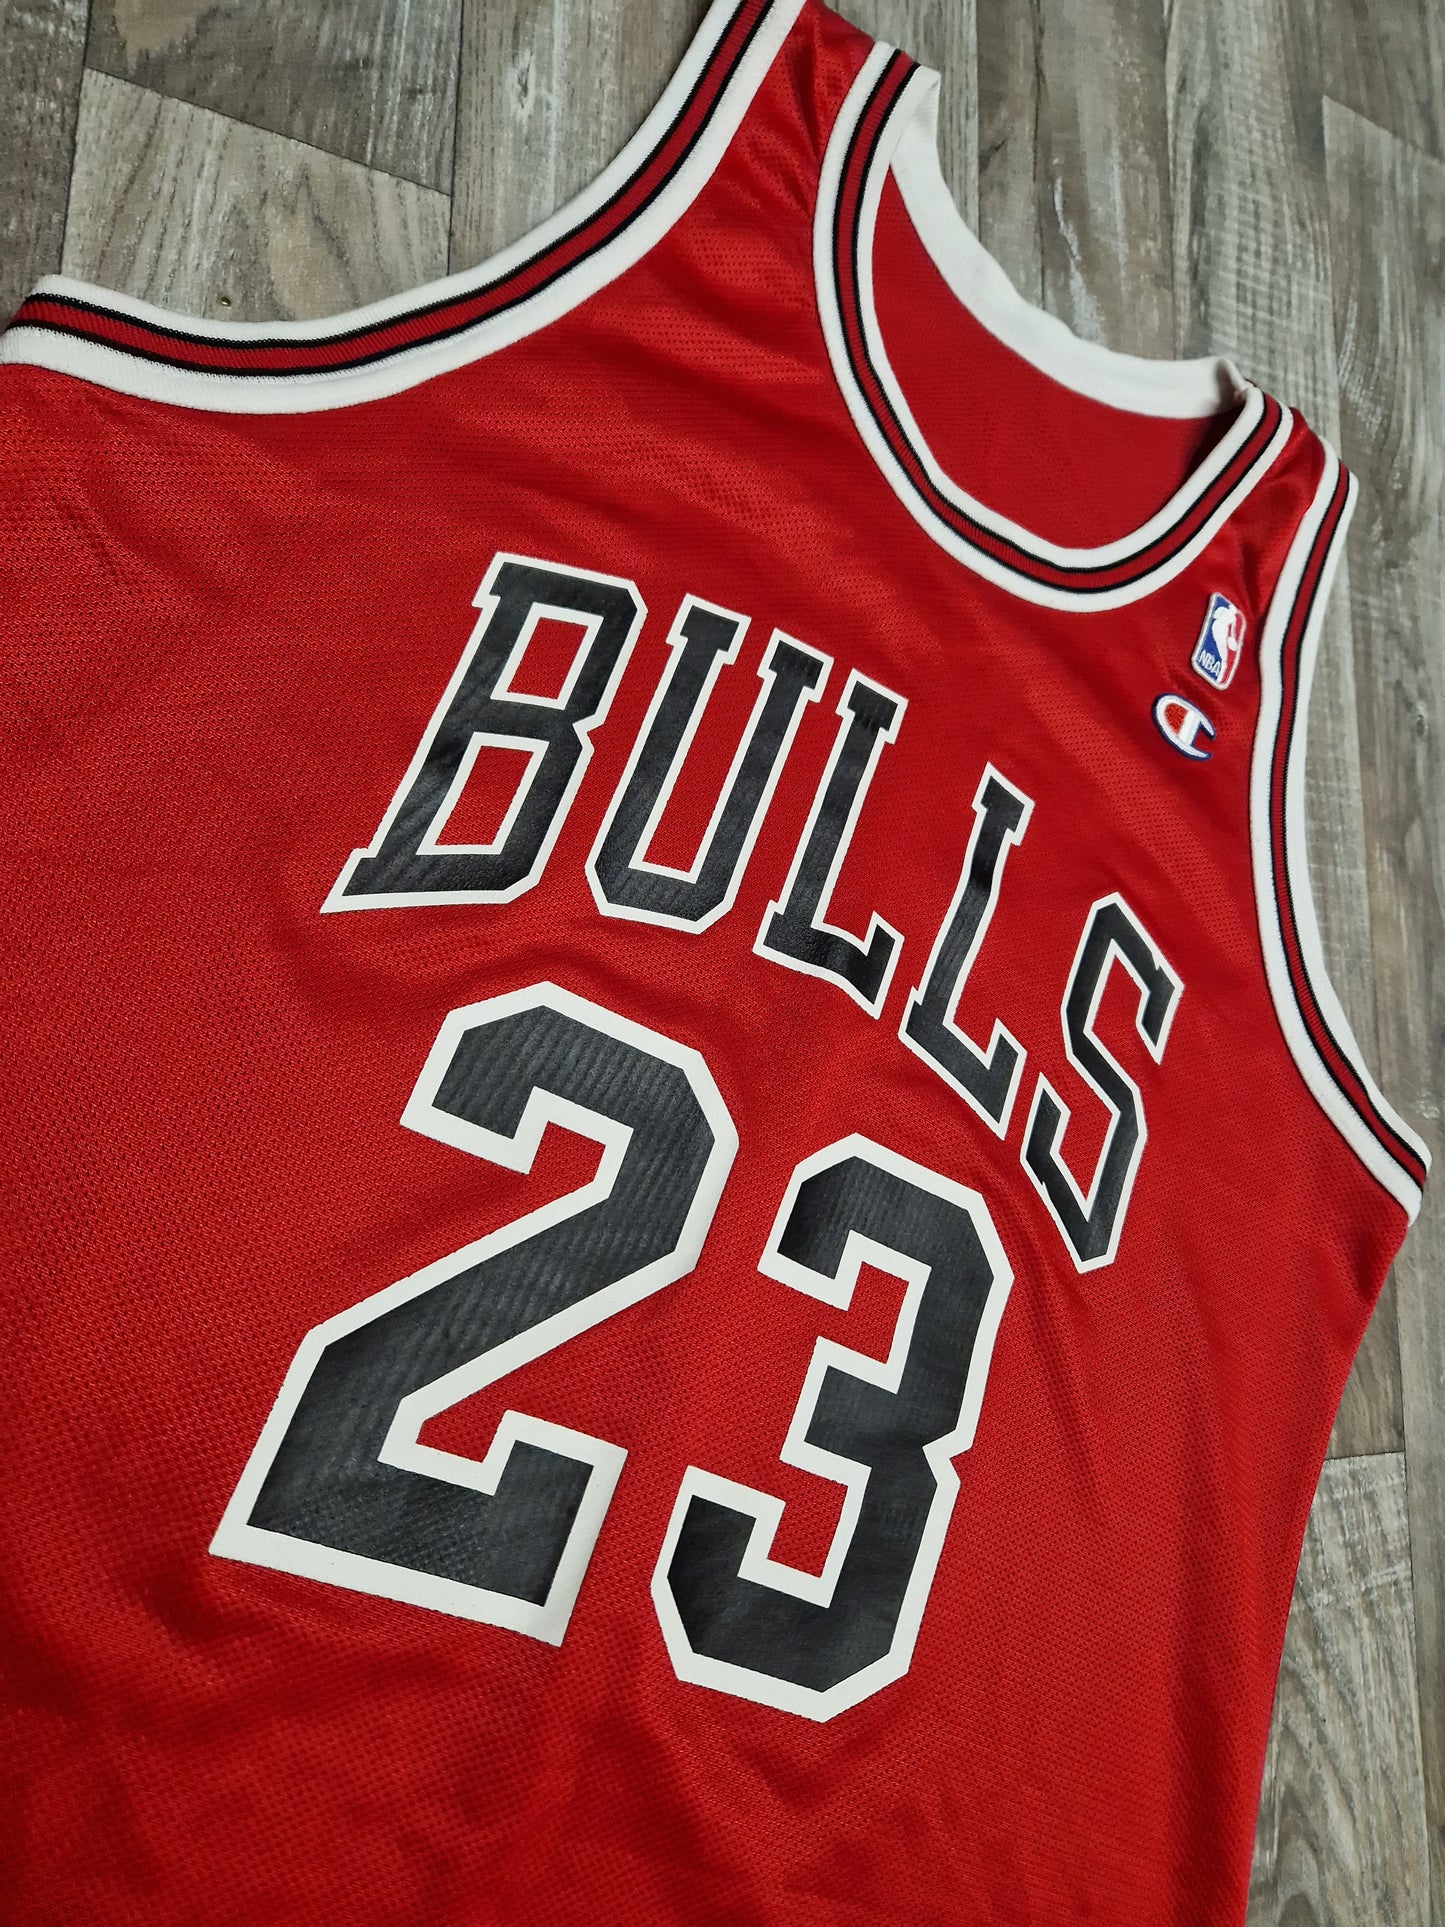 Michael Jordan Chicago Bulls Jersey Size Large